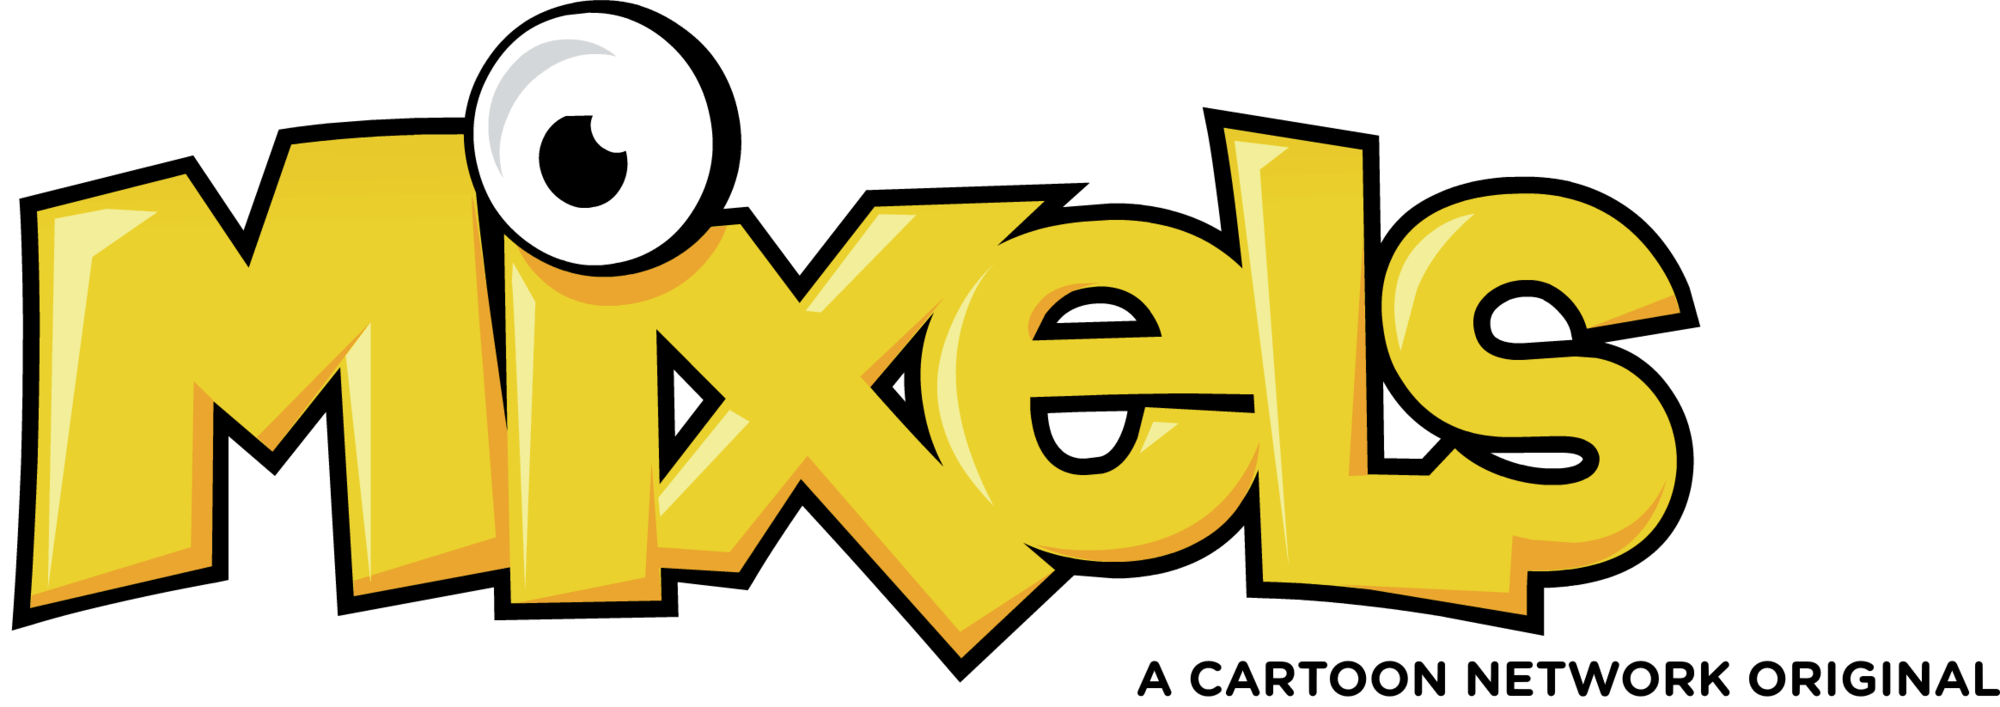 Mixels Logo - Mixels (TV series) | Mixels Wiki | FANDOM powered by Wikia